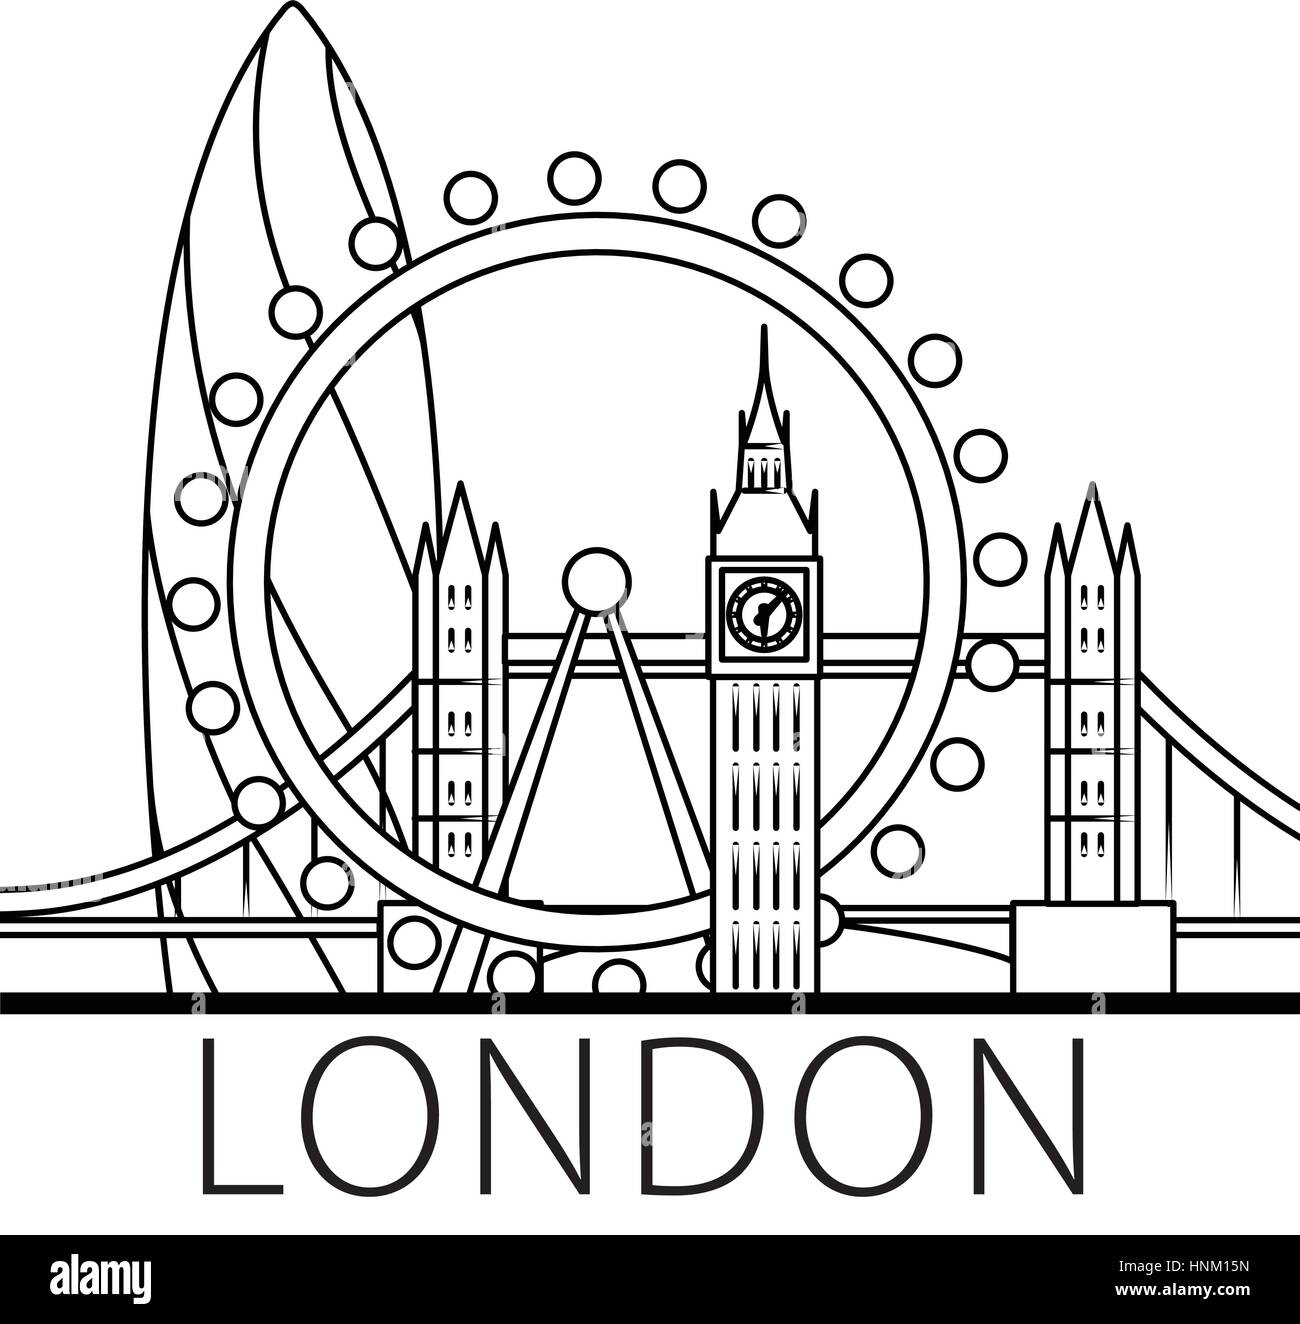 London skyline illustration Black and White Stock Photos & Images - Alamy